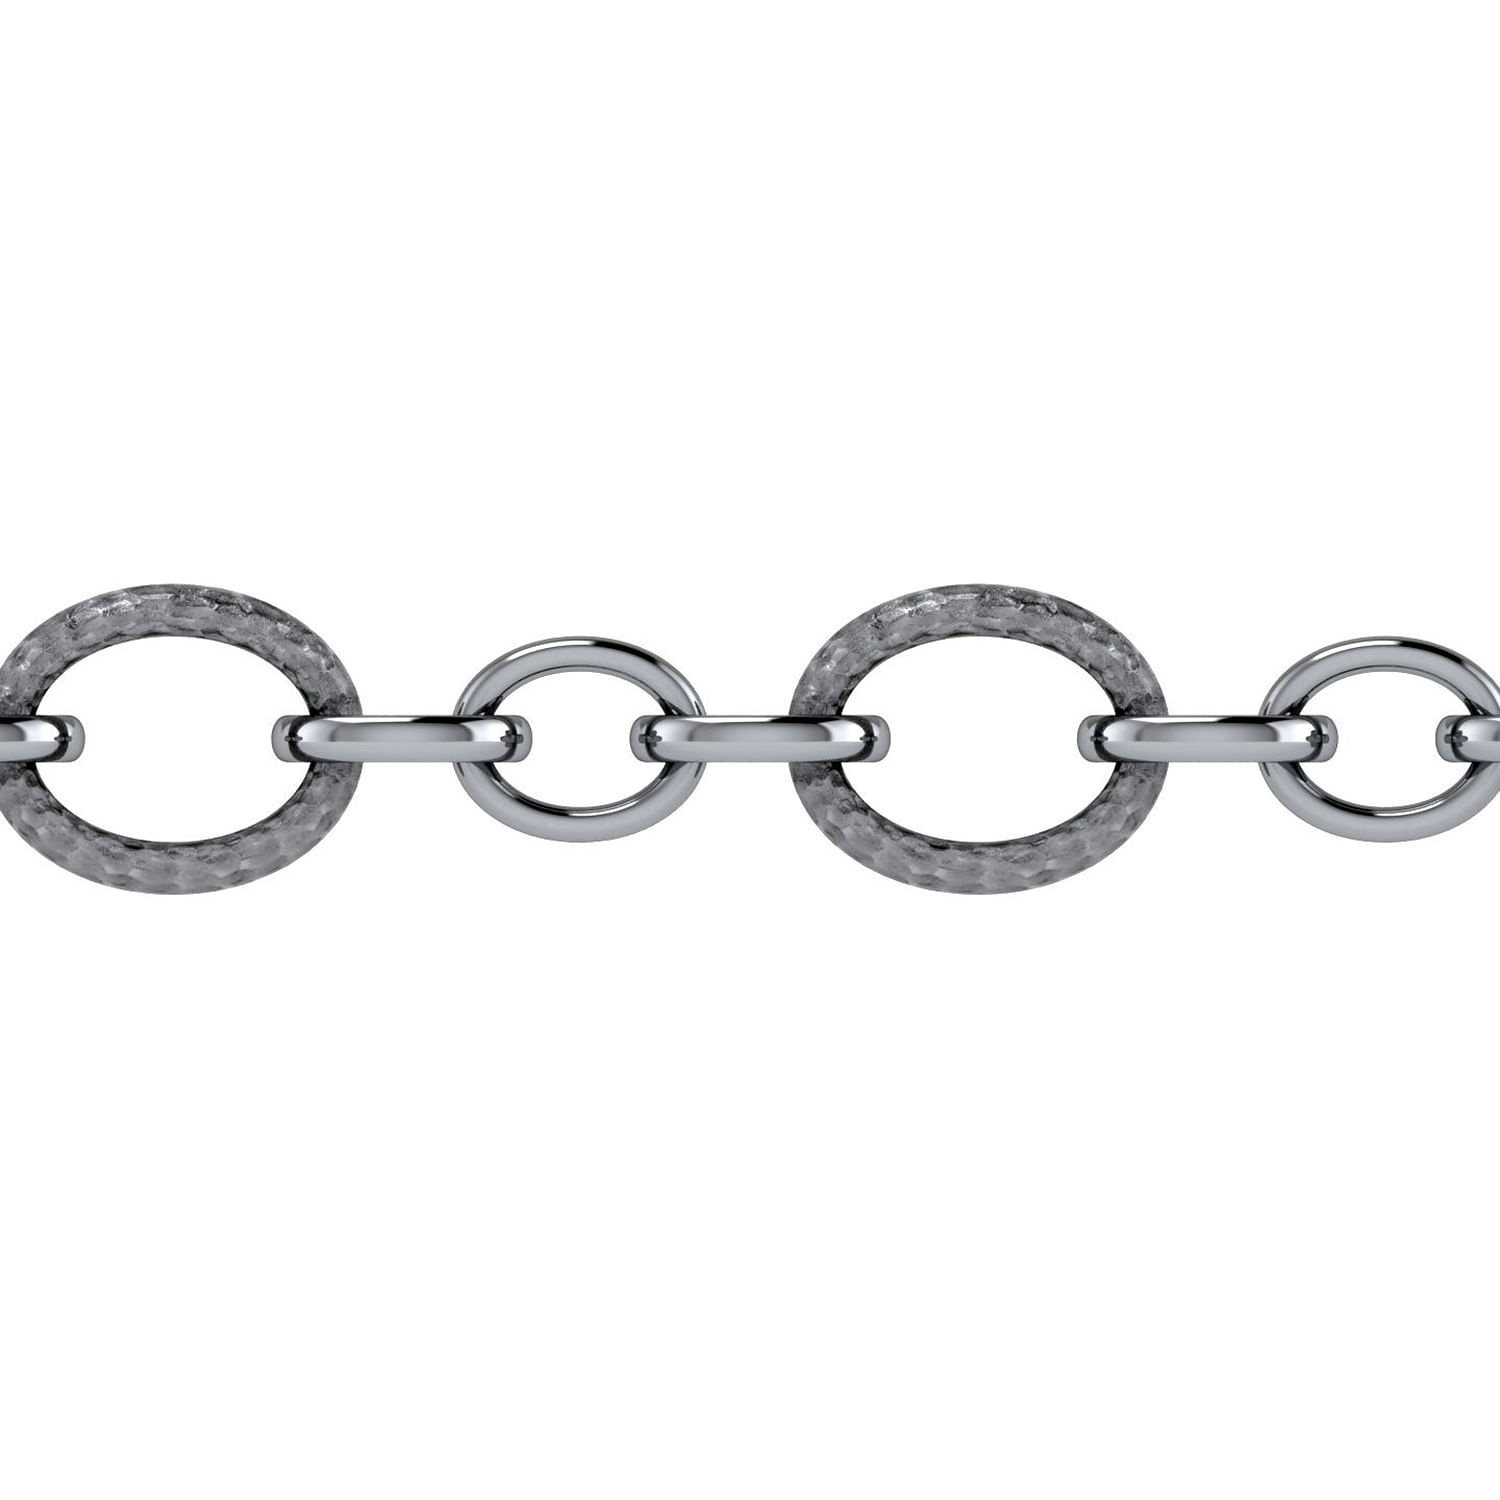 925 Sterling Silver Toggle Link Chain Bracelet